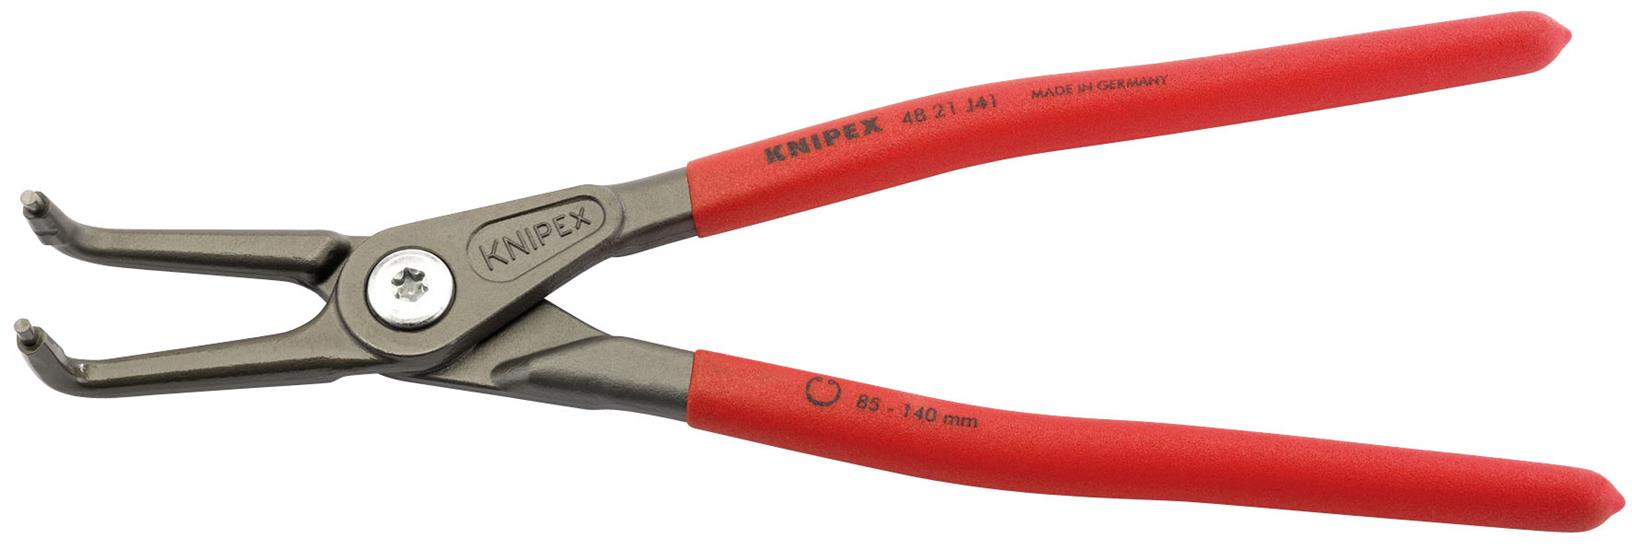 Draper 75087 ⡈ 21 J41) - Knipex 48 21 J41 90° Internal Straight Tip Circlip Pliers, 85 - 140mm Capacity, 305mm